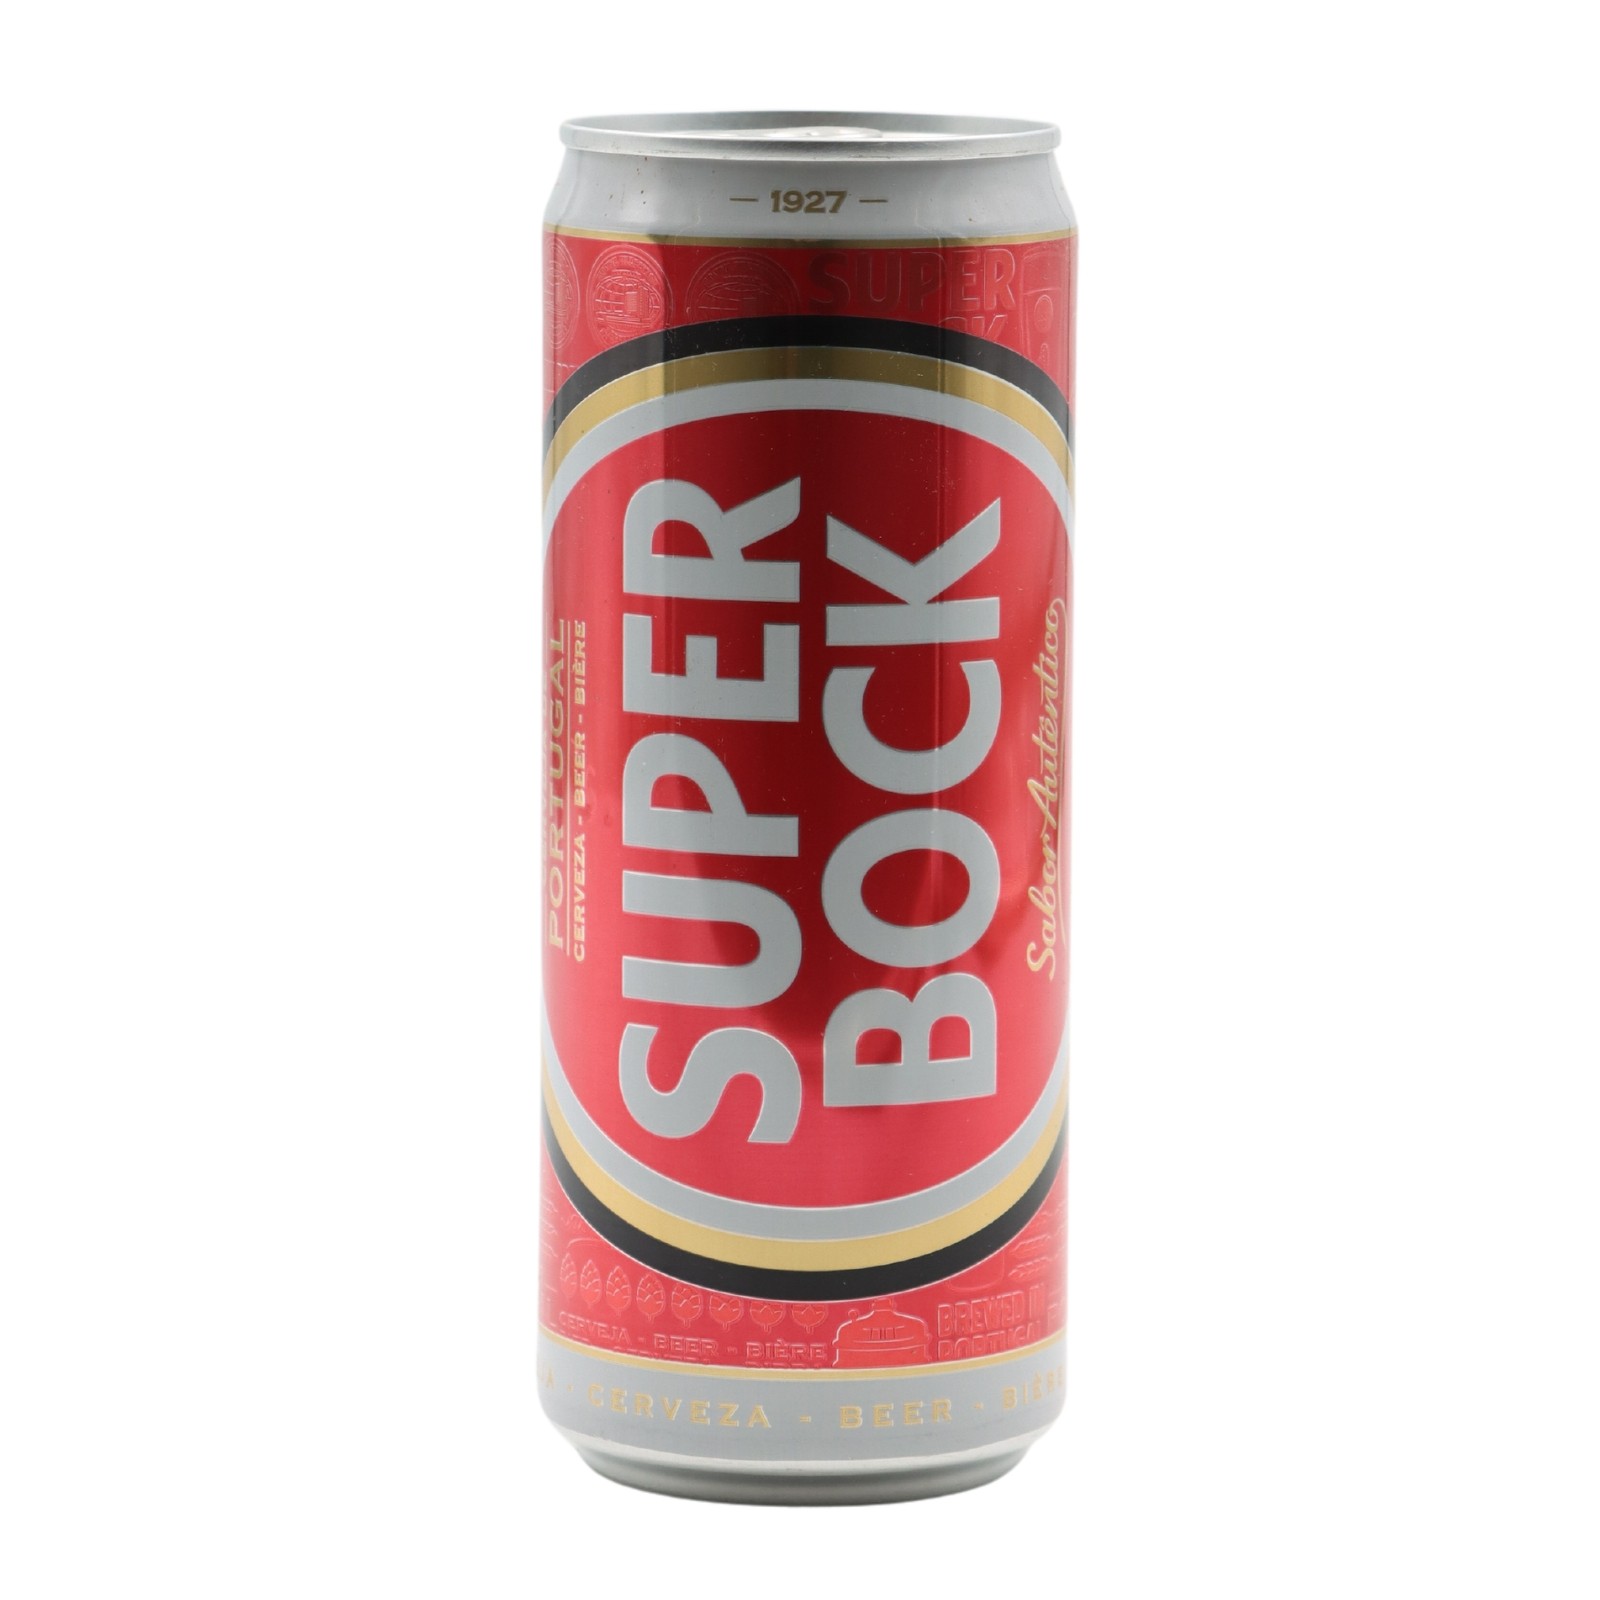 Super Bock in can